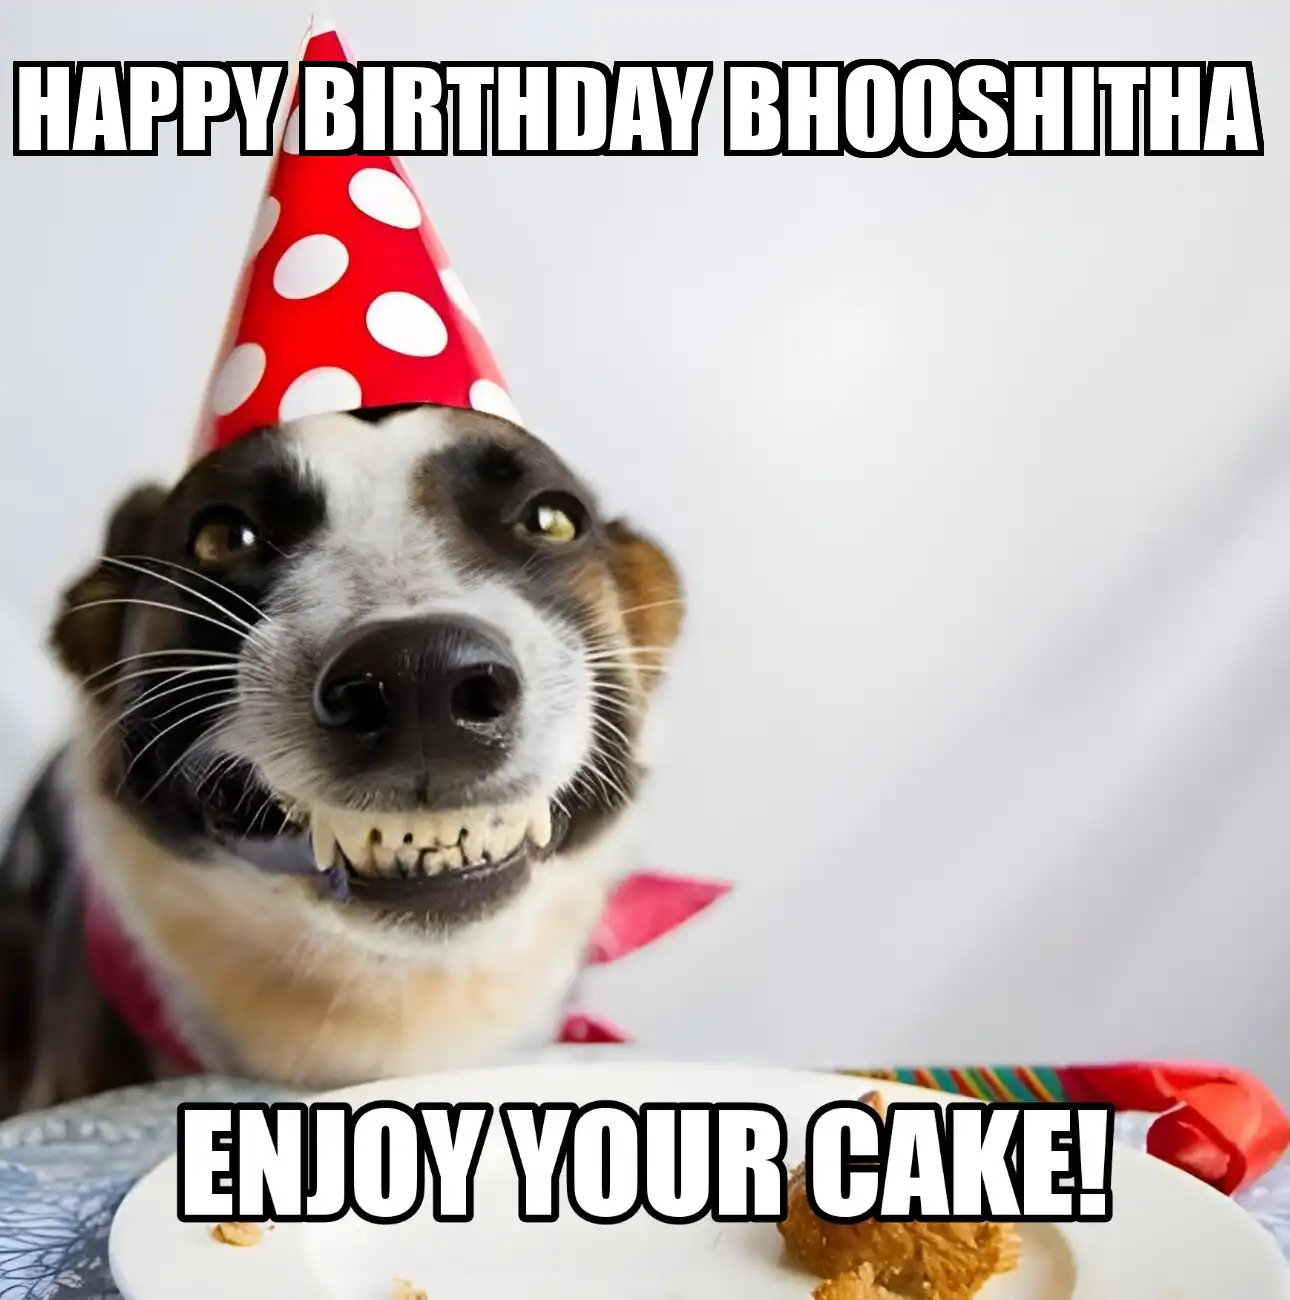 Happy Birthday Bhooshitha Enjoy Your Cake Dog Meme